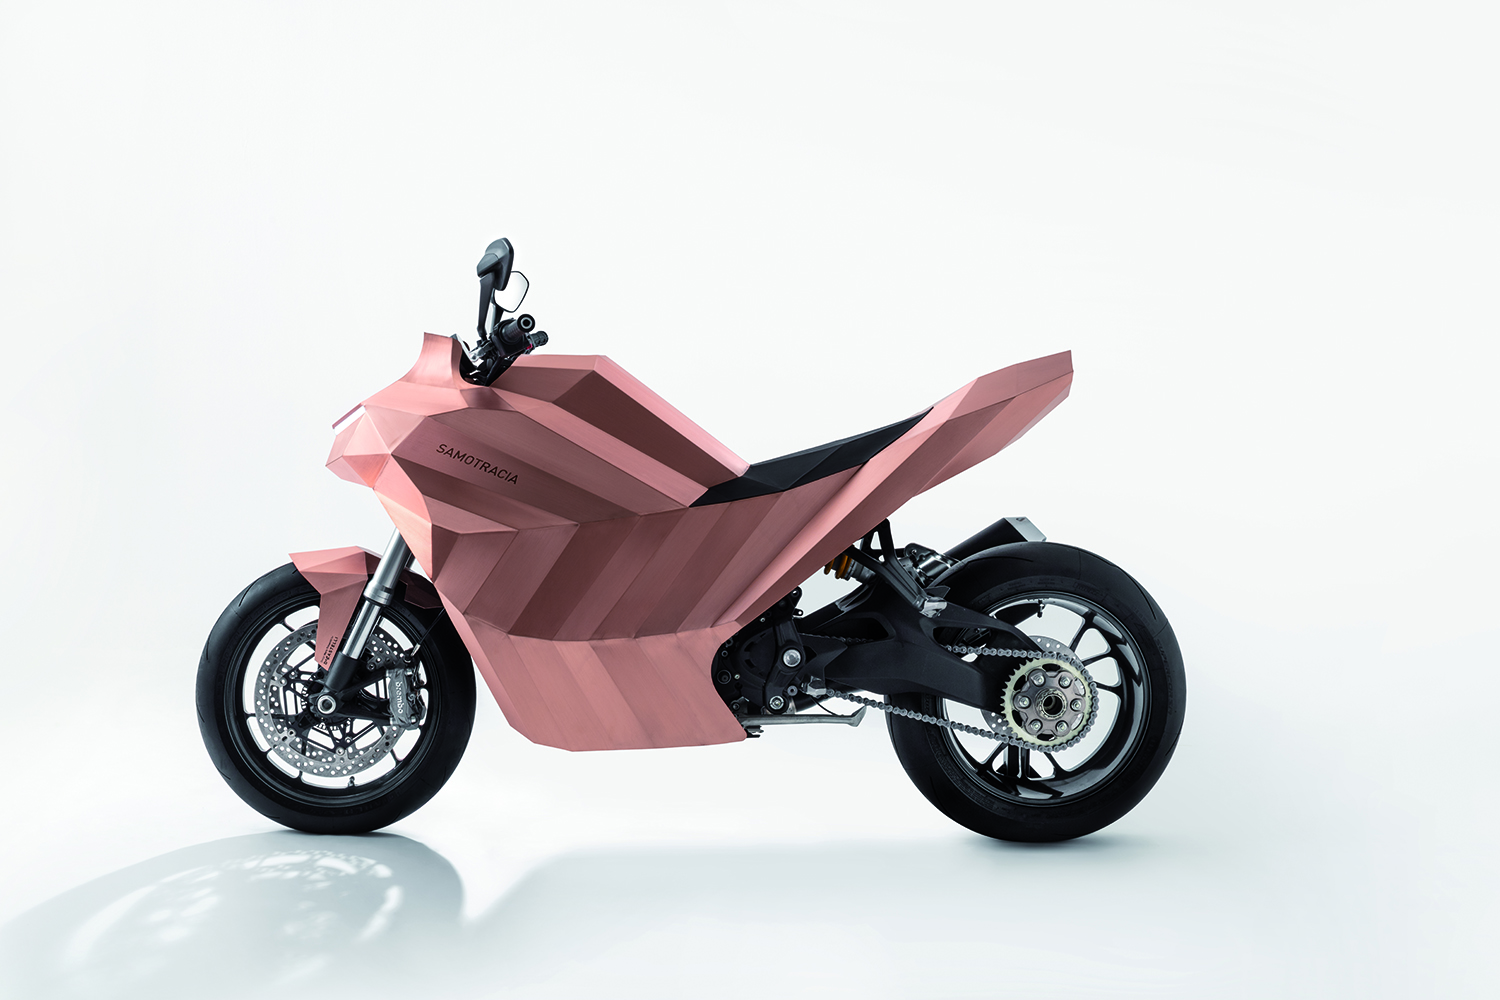 Copper motorcycle with aerodynamic aesthetics